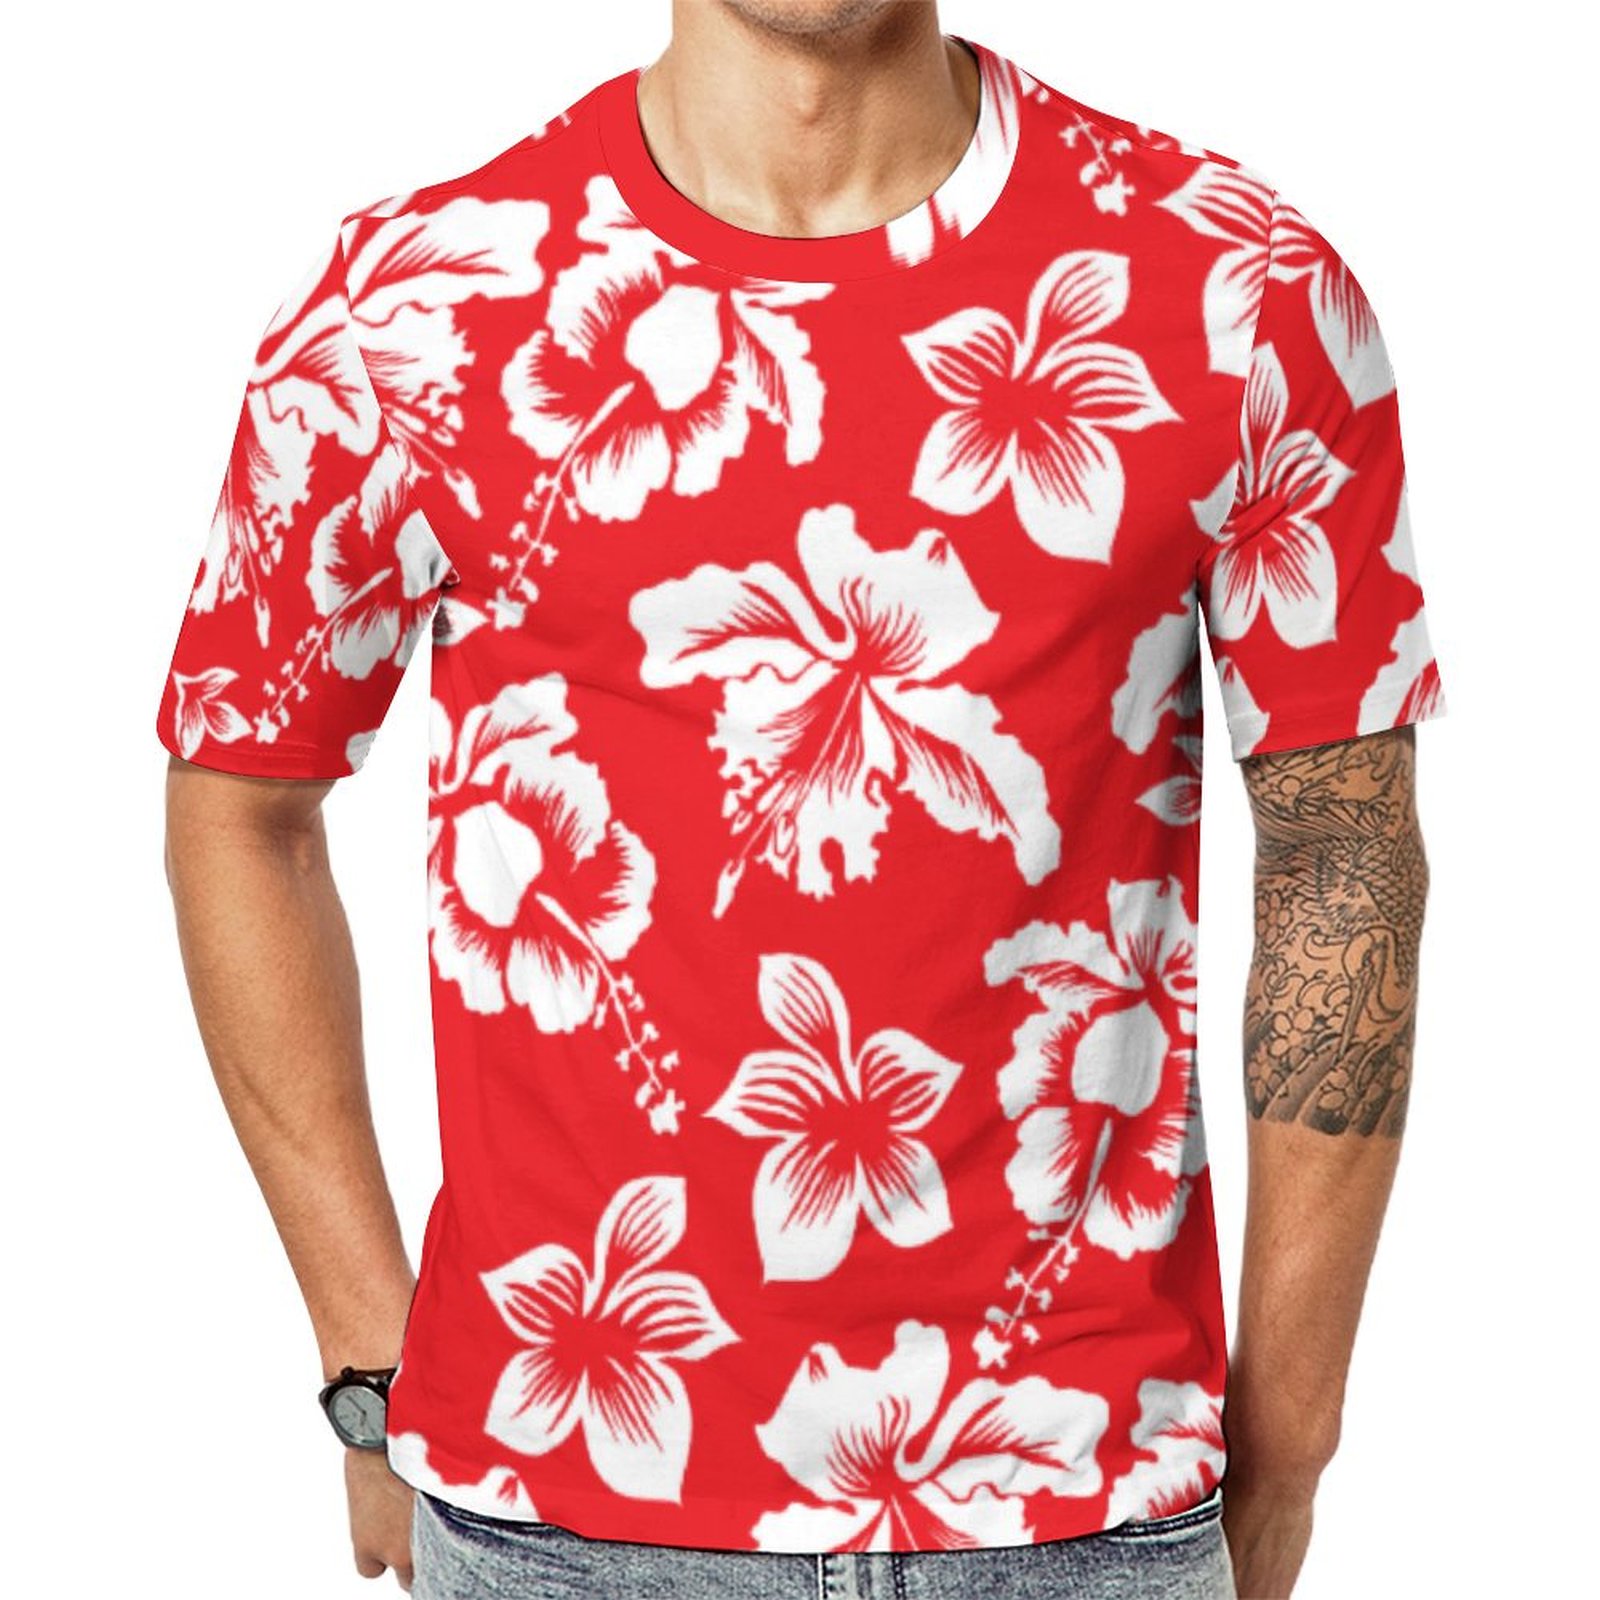 Red Hawaiian Hibiscus Flower Short Sleeve Print Unisex Tshirt Summer Casual Tees for Men and Women Coolcoshirts